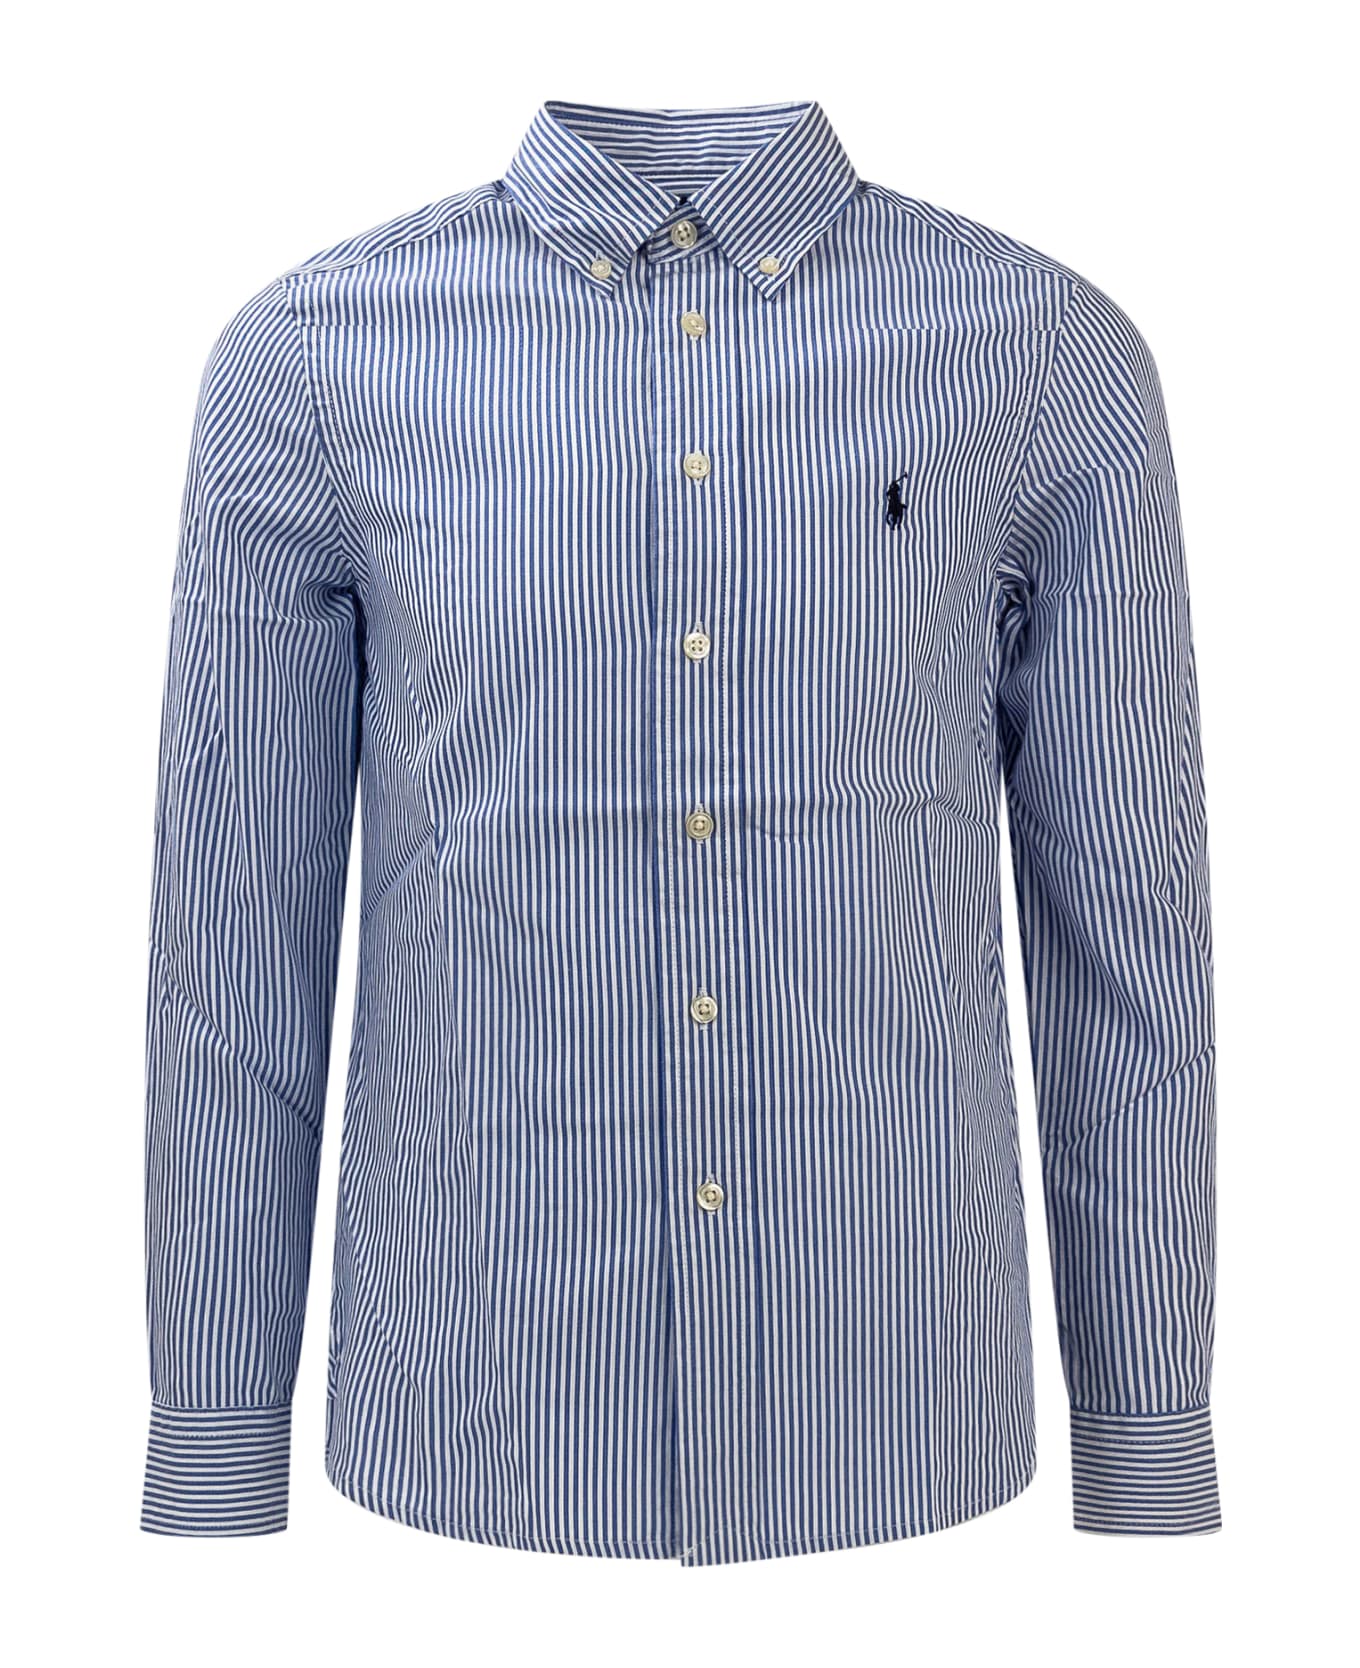 Polo Ralph Lauren Shirt With Logo - BSR BLUE/WHITE